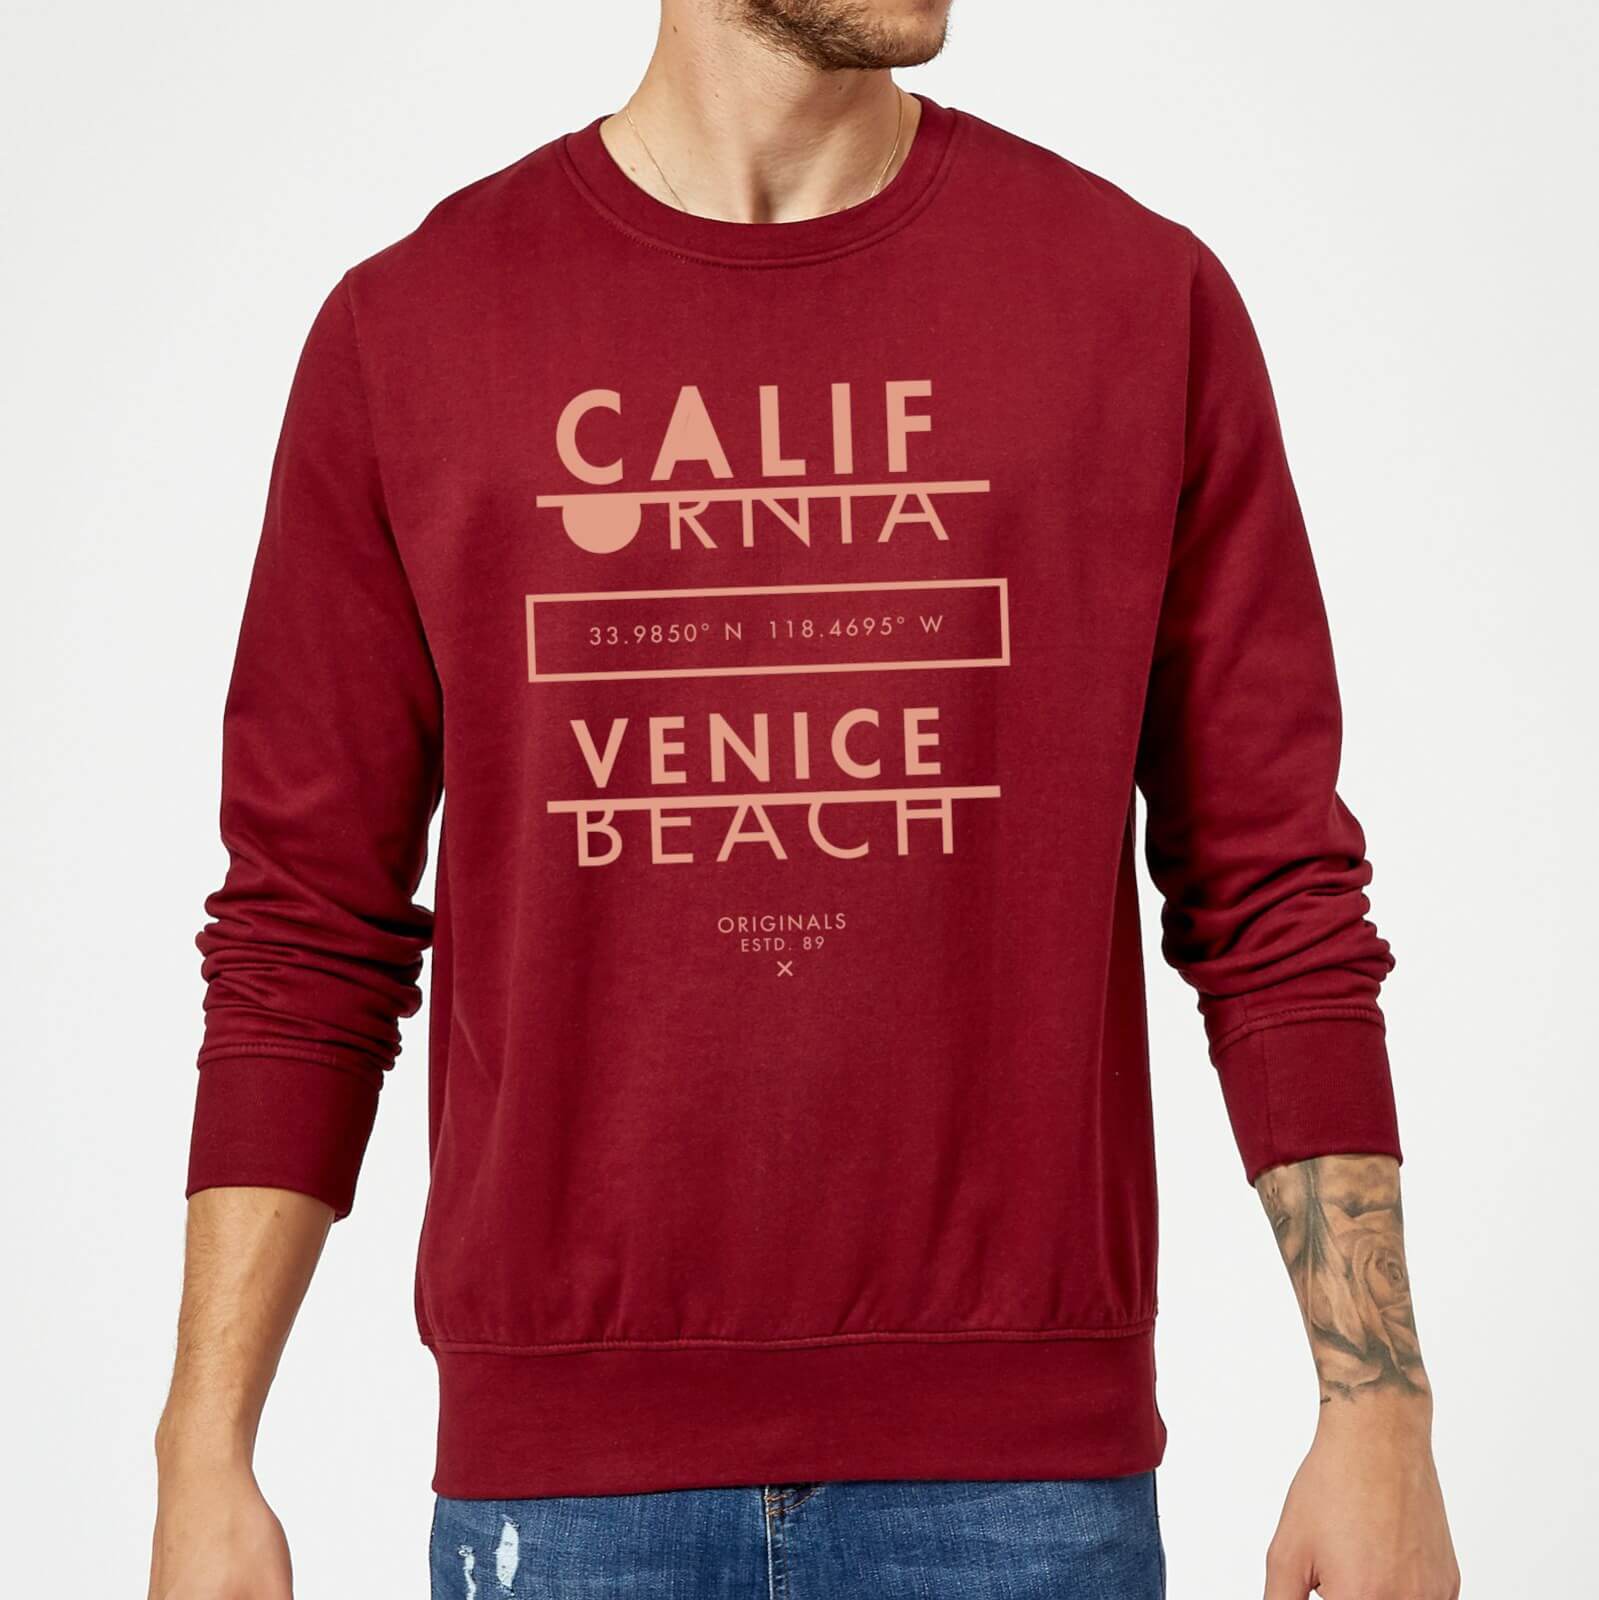 Venice Beach Sweatshirt - Burgundy - Xxl